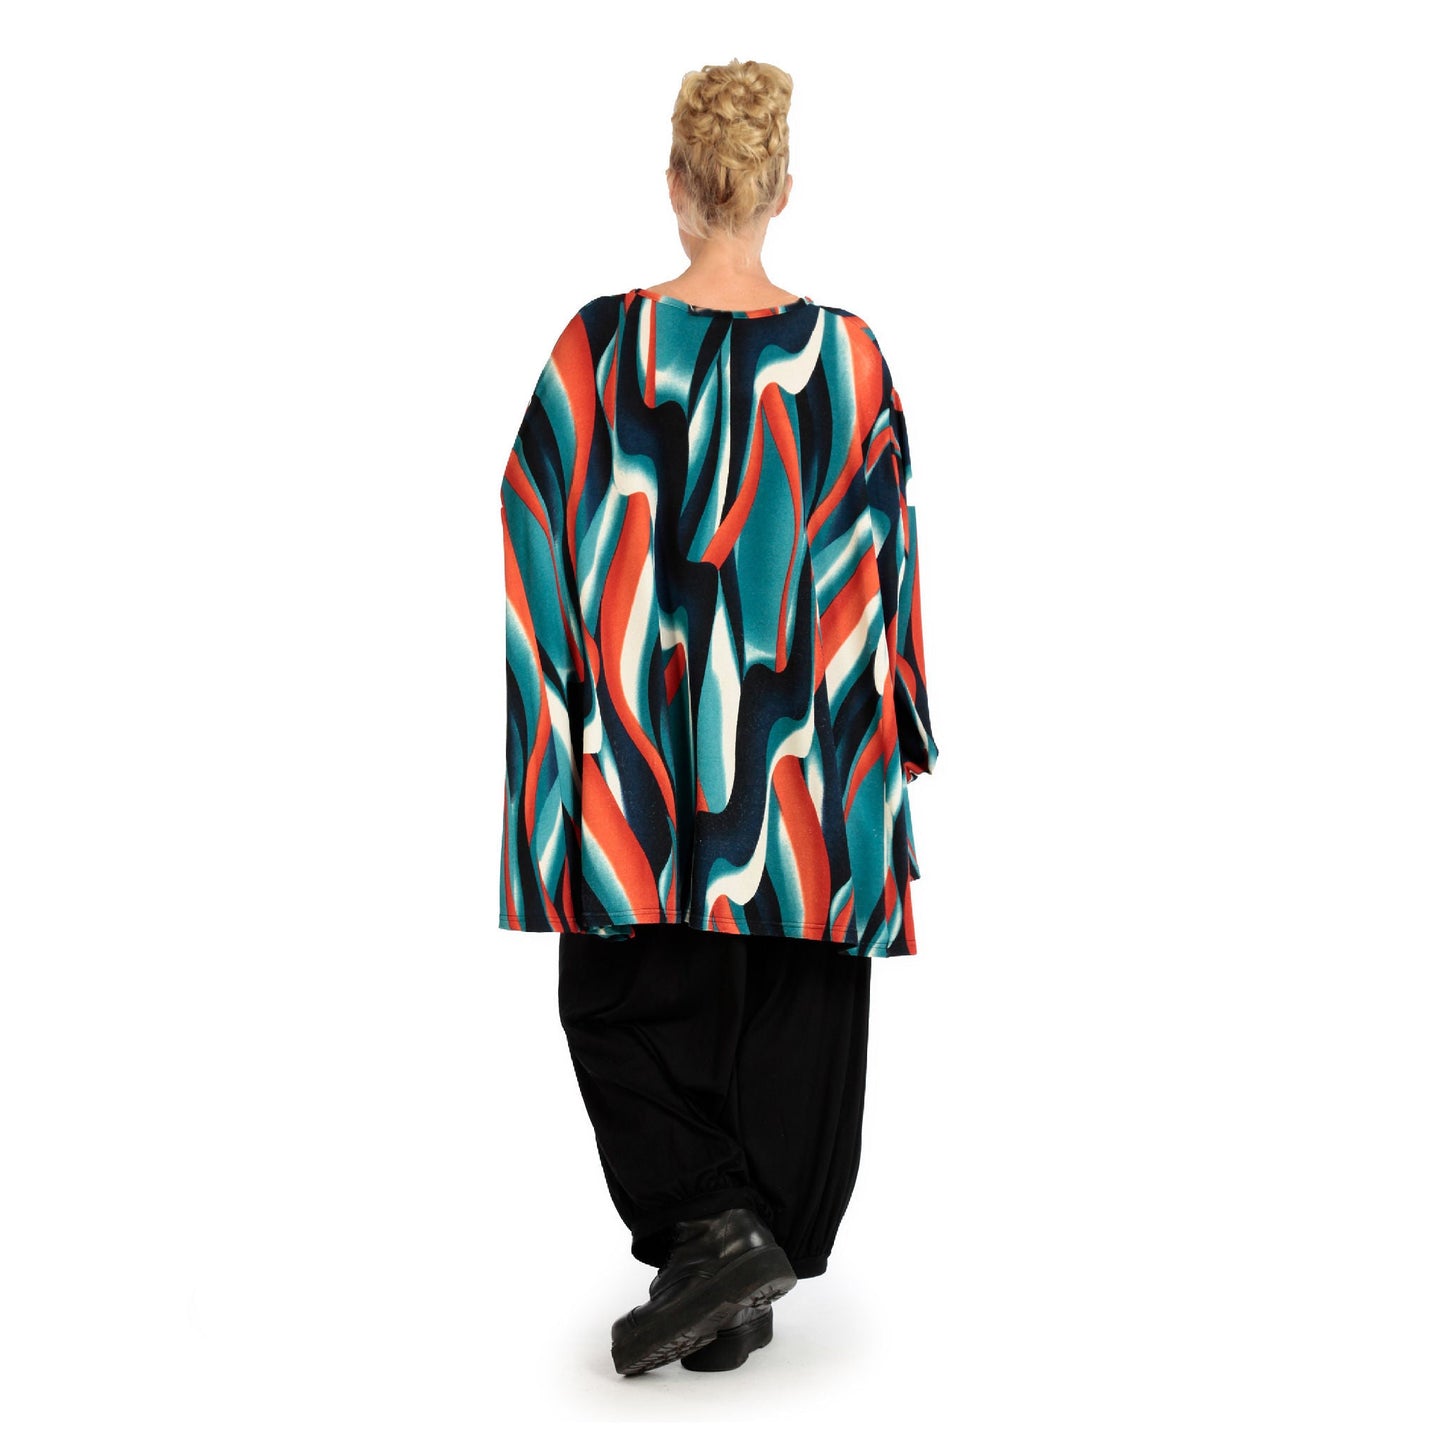 Winter big shirt in A-shape made of soft fine knit quality, Aurora in blue-orange-black